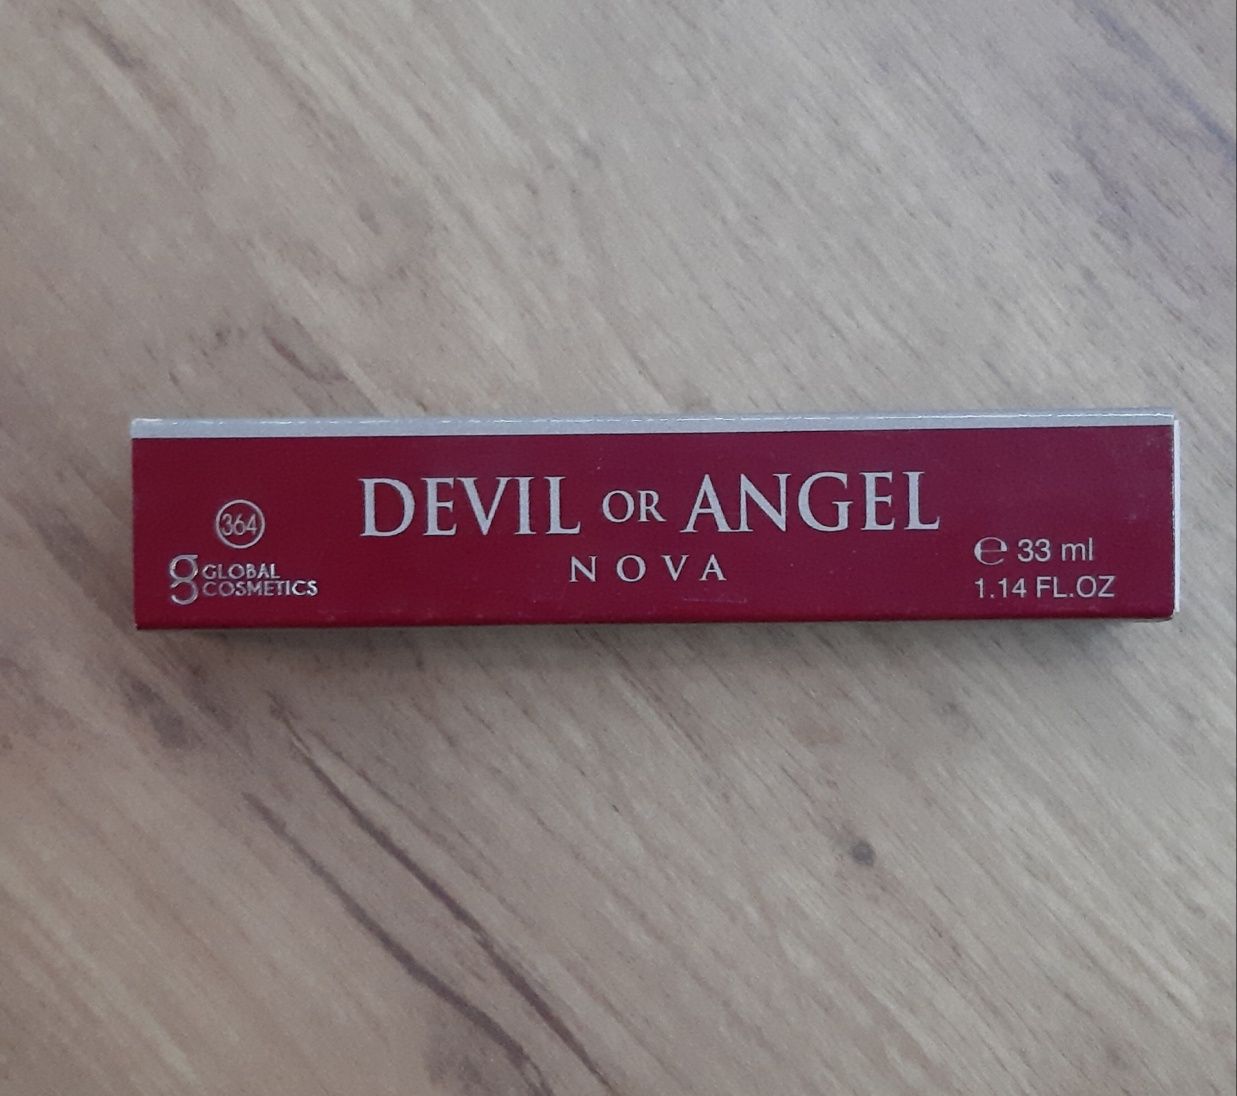 Damskie Perfumy Devil or Angel Nova (Global Cosmetics)